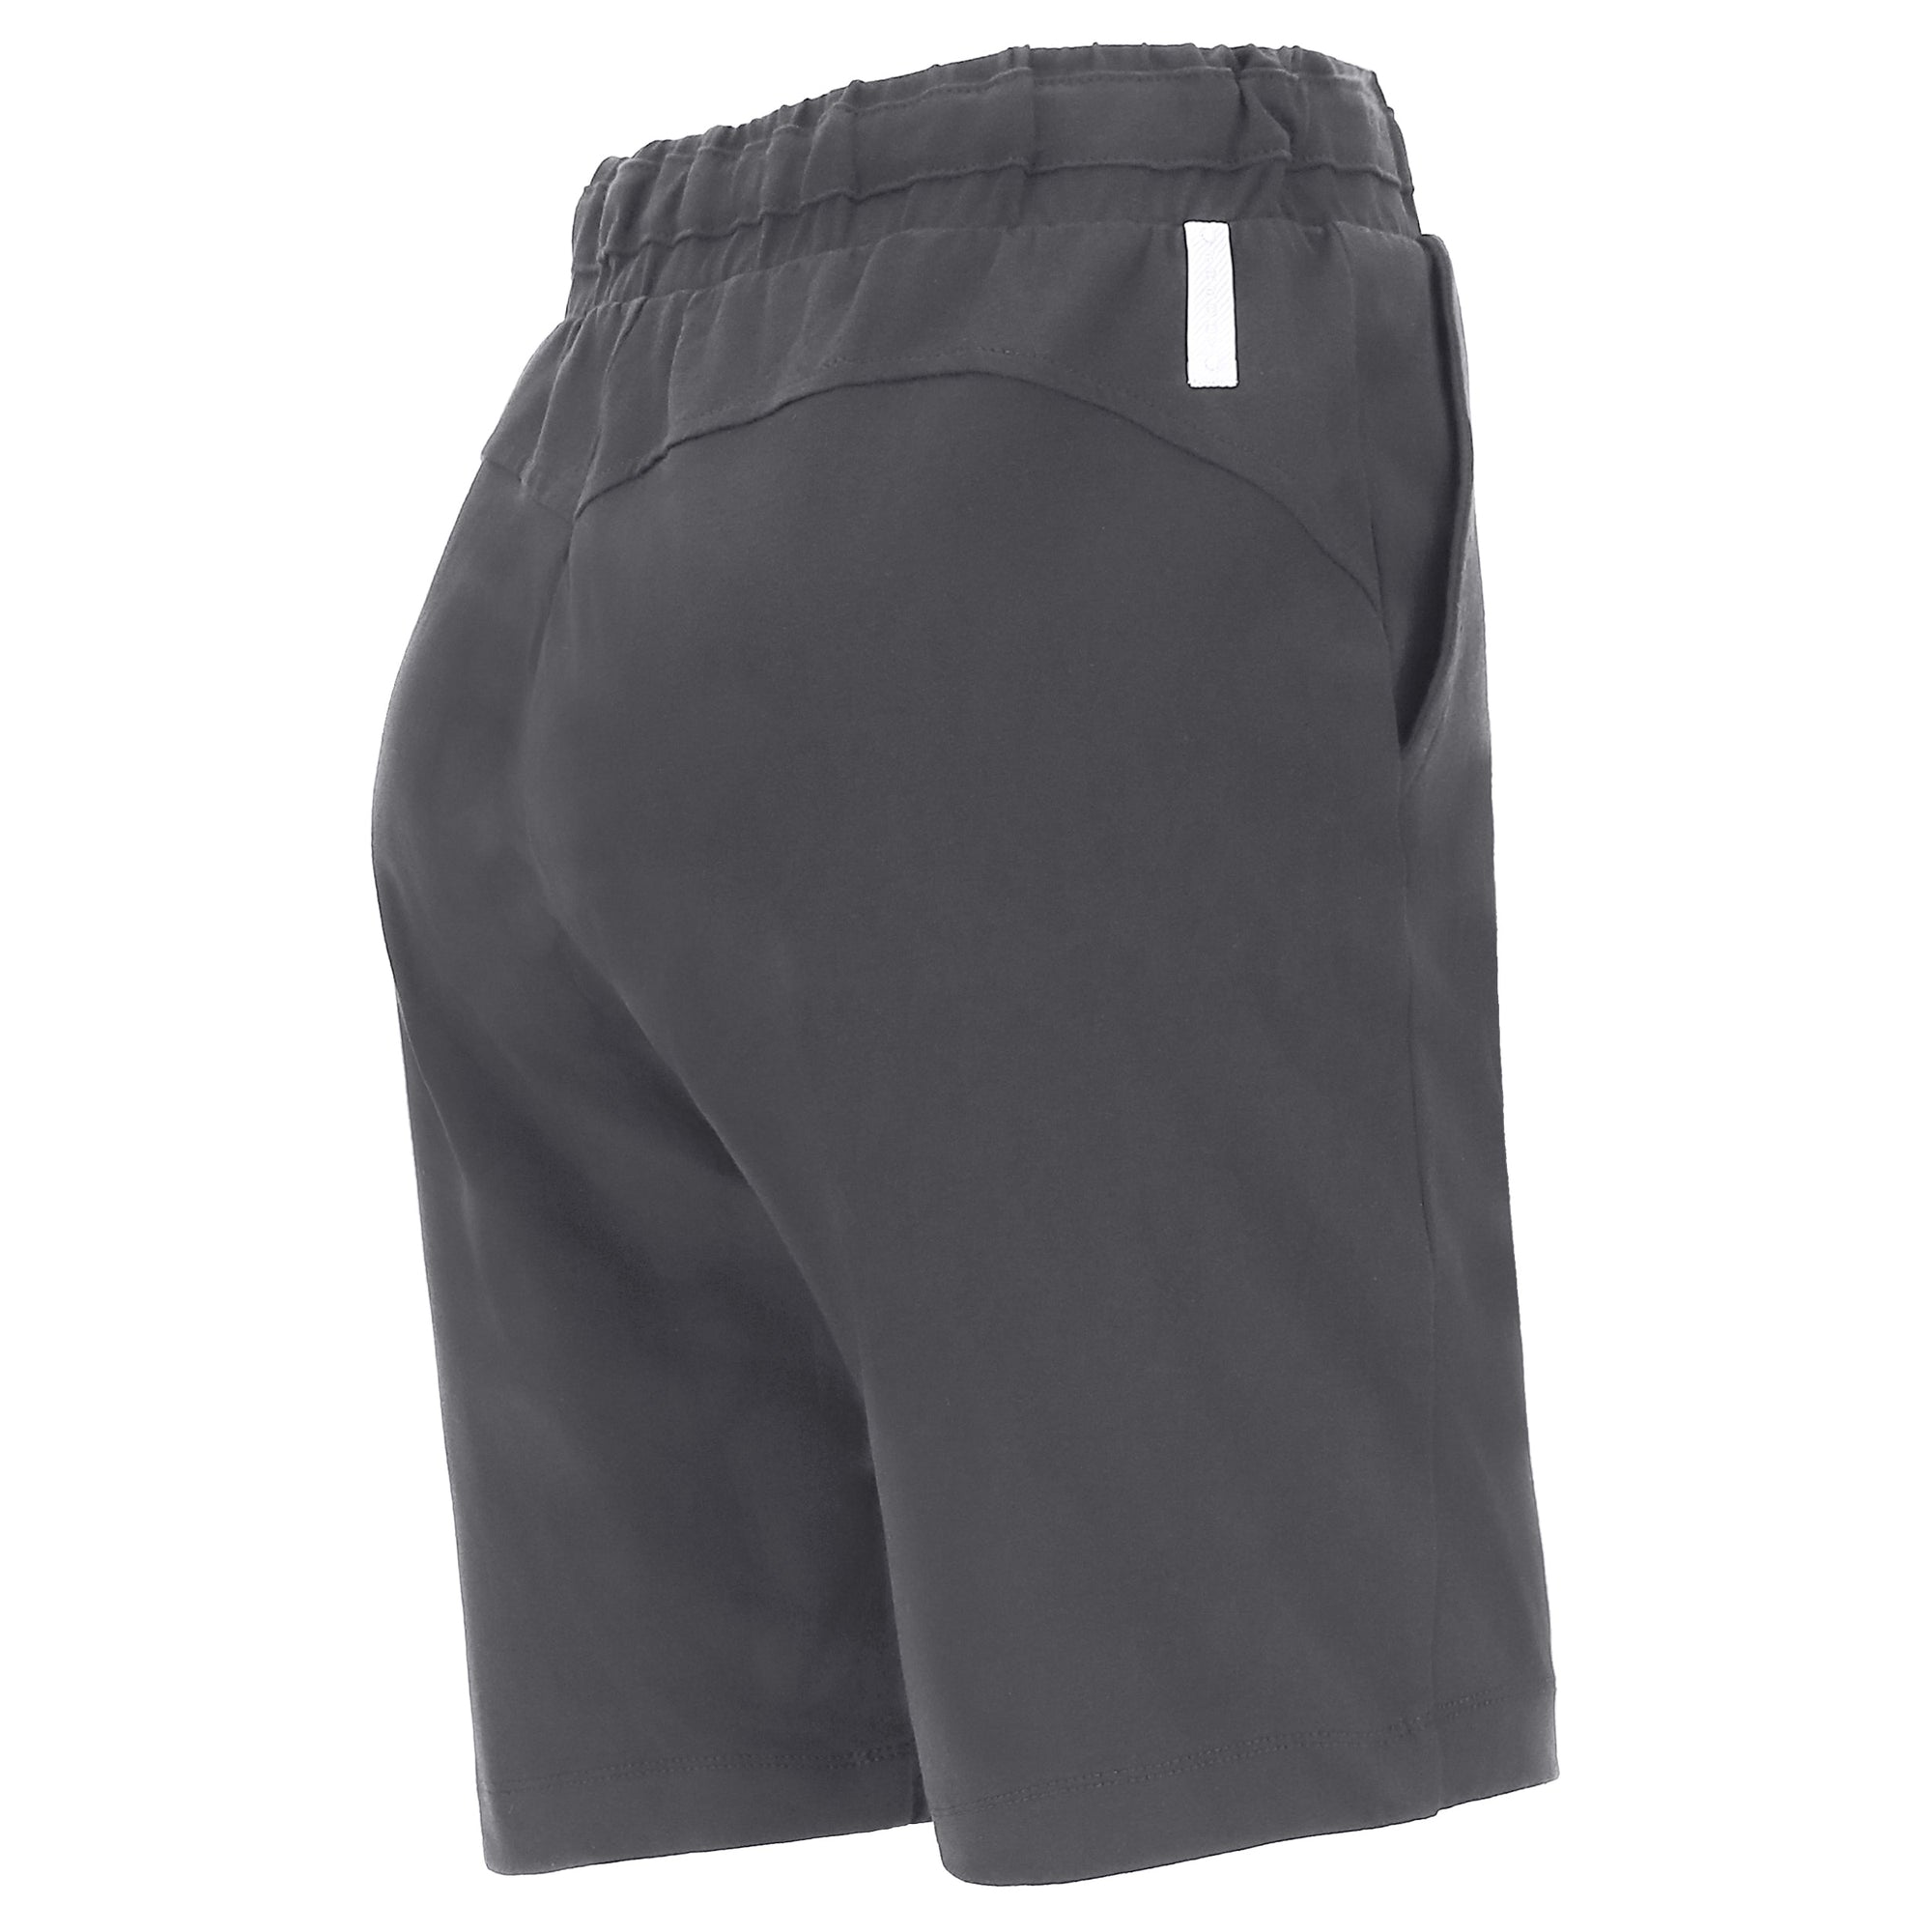 Bermuda Shorts - Grey 2